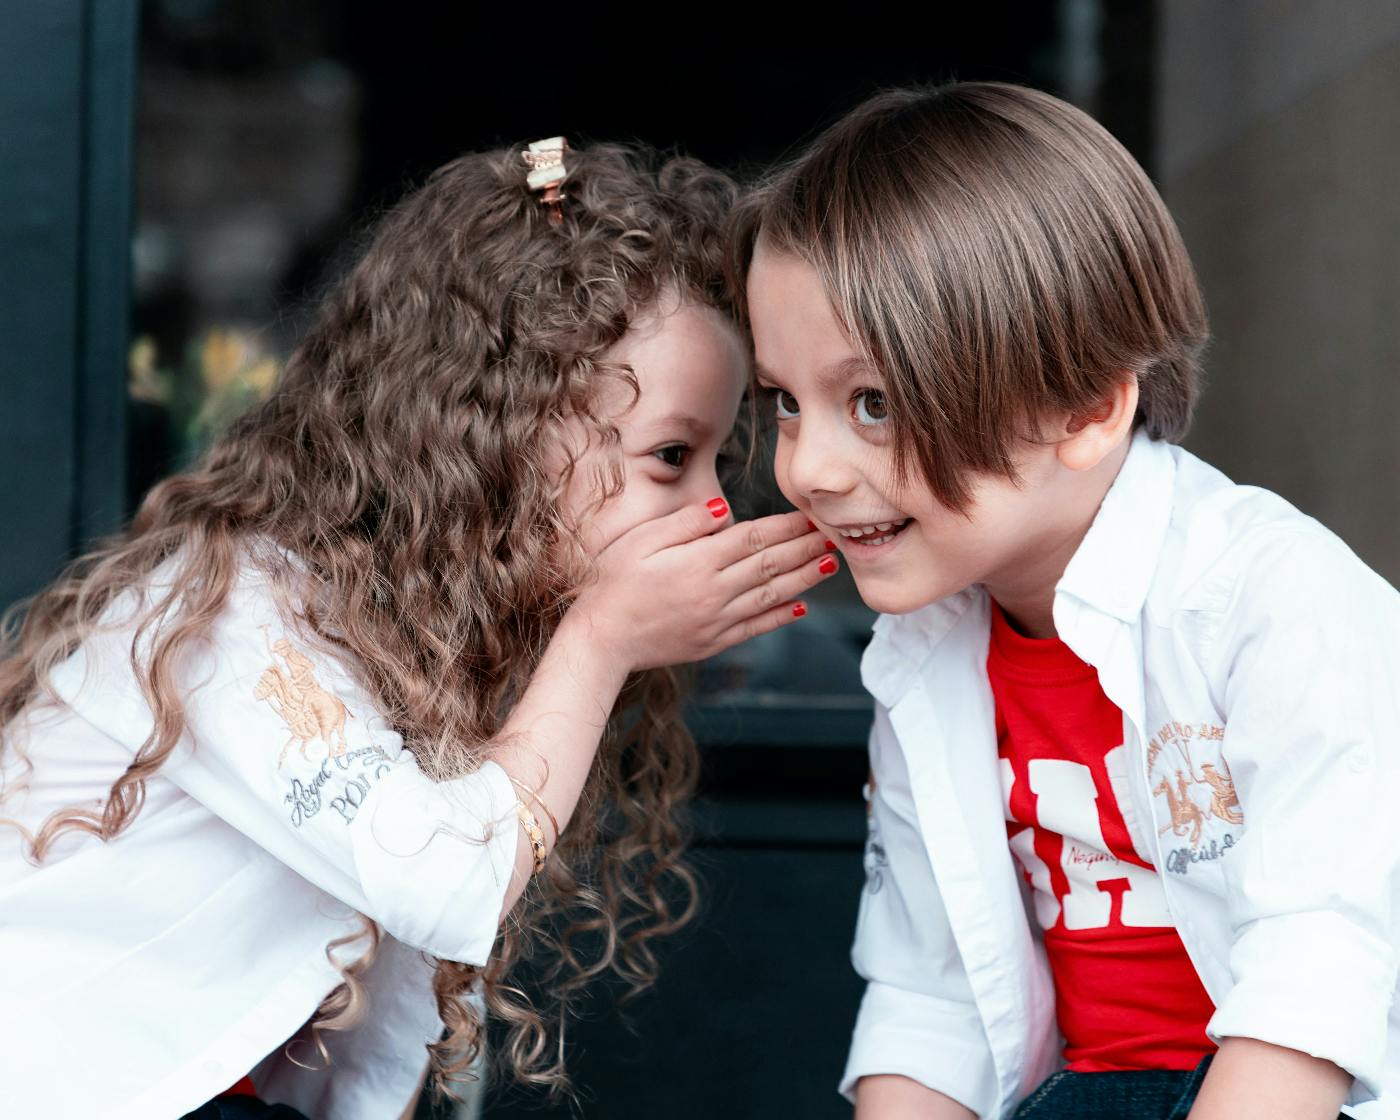 A little girl whispering to a little boy